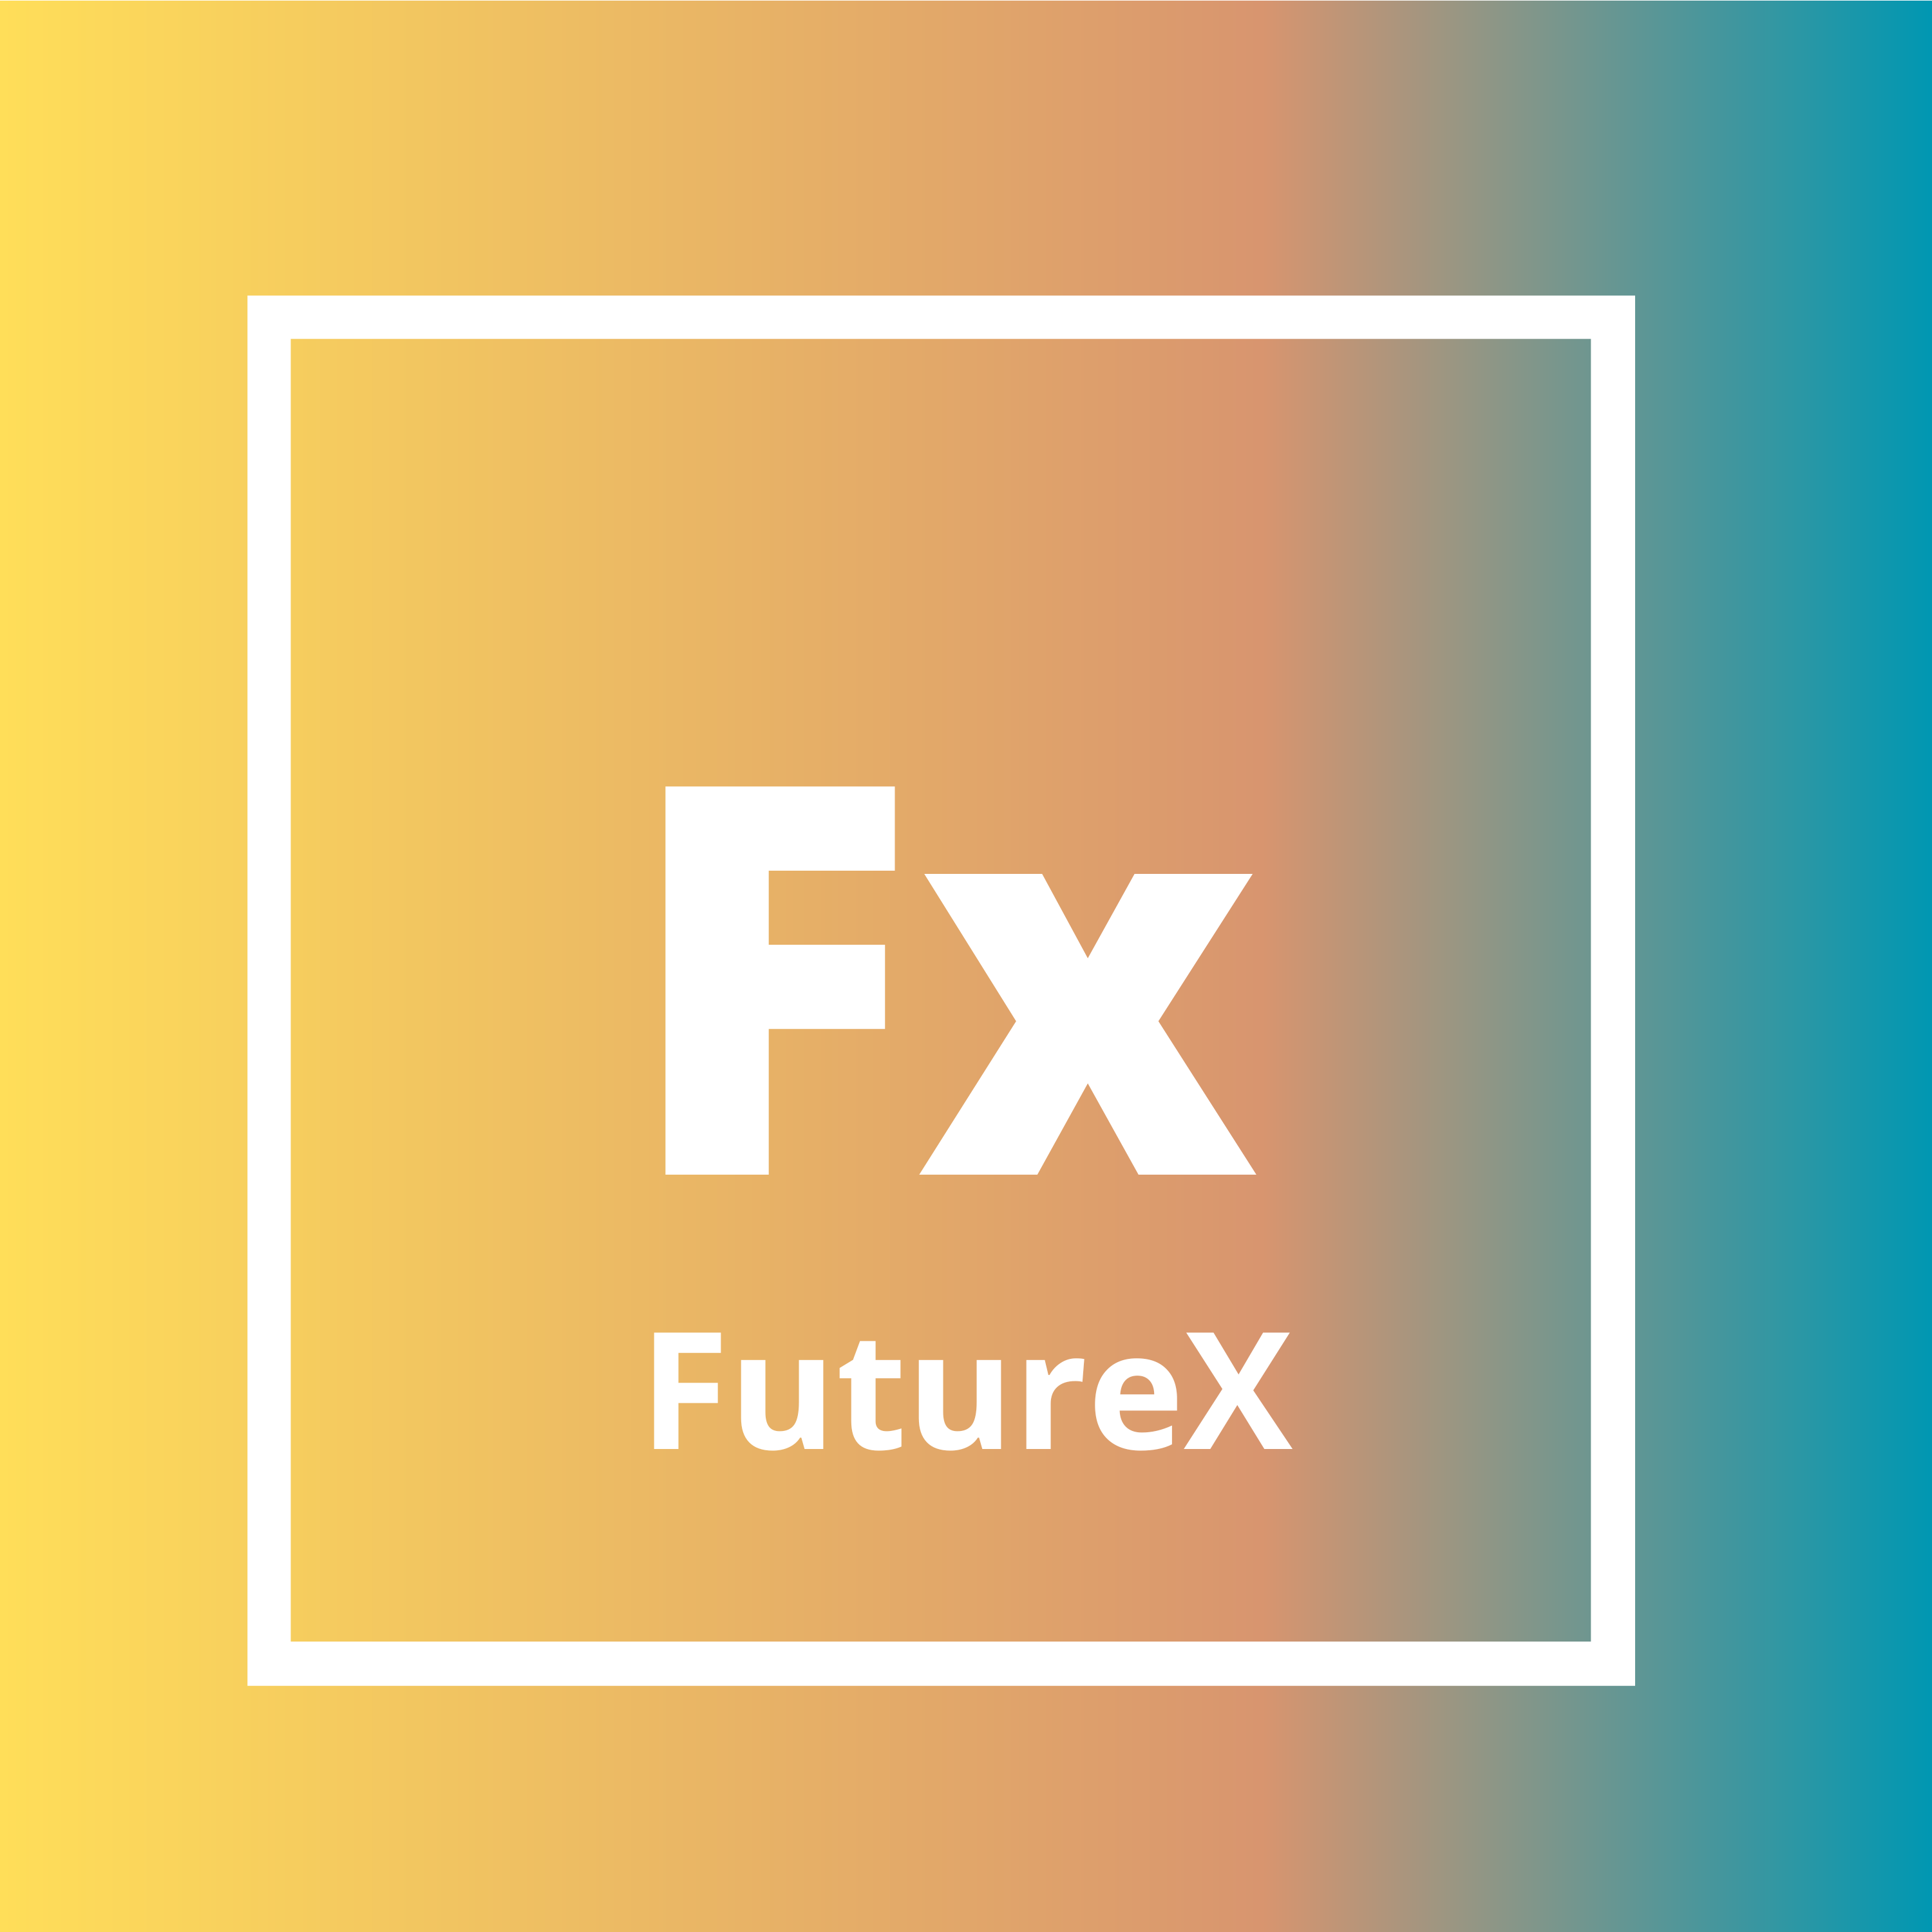 FutureX logo with a gold background